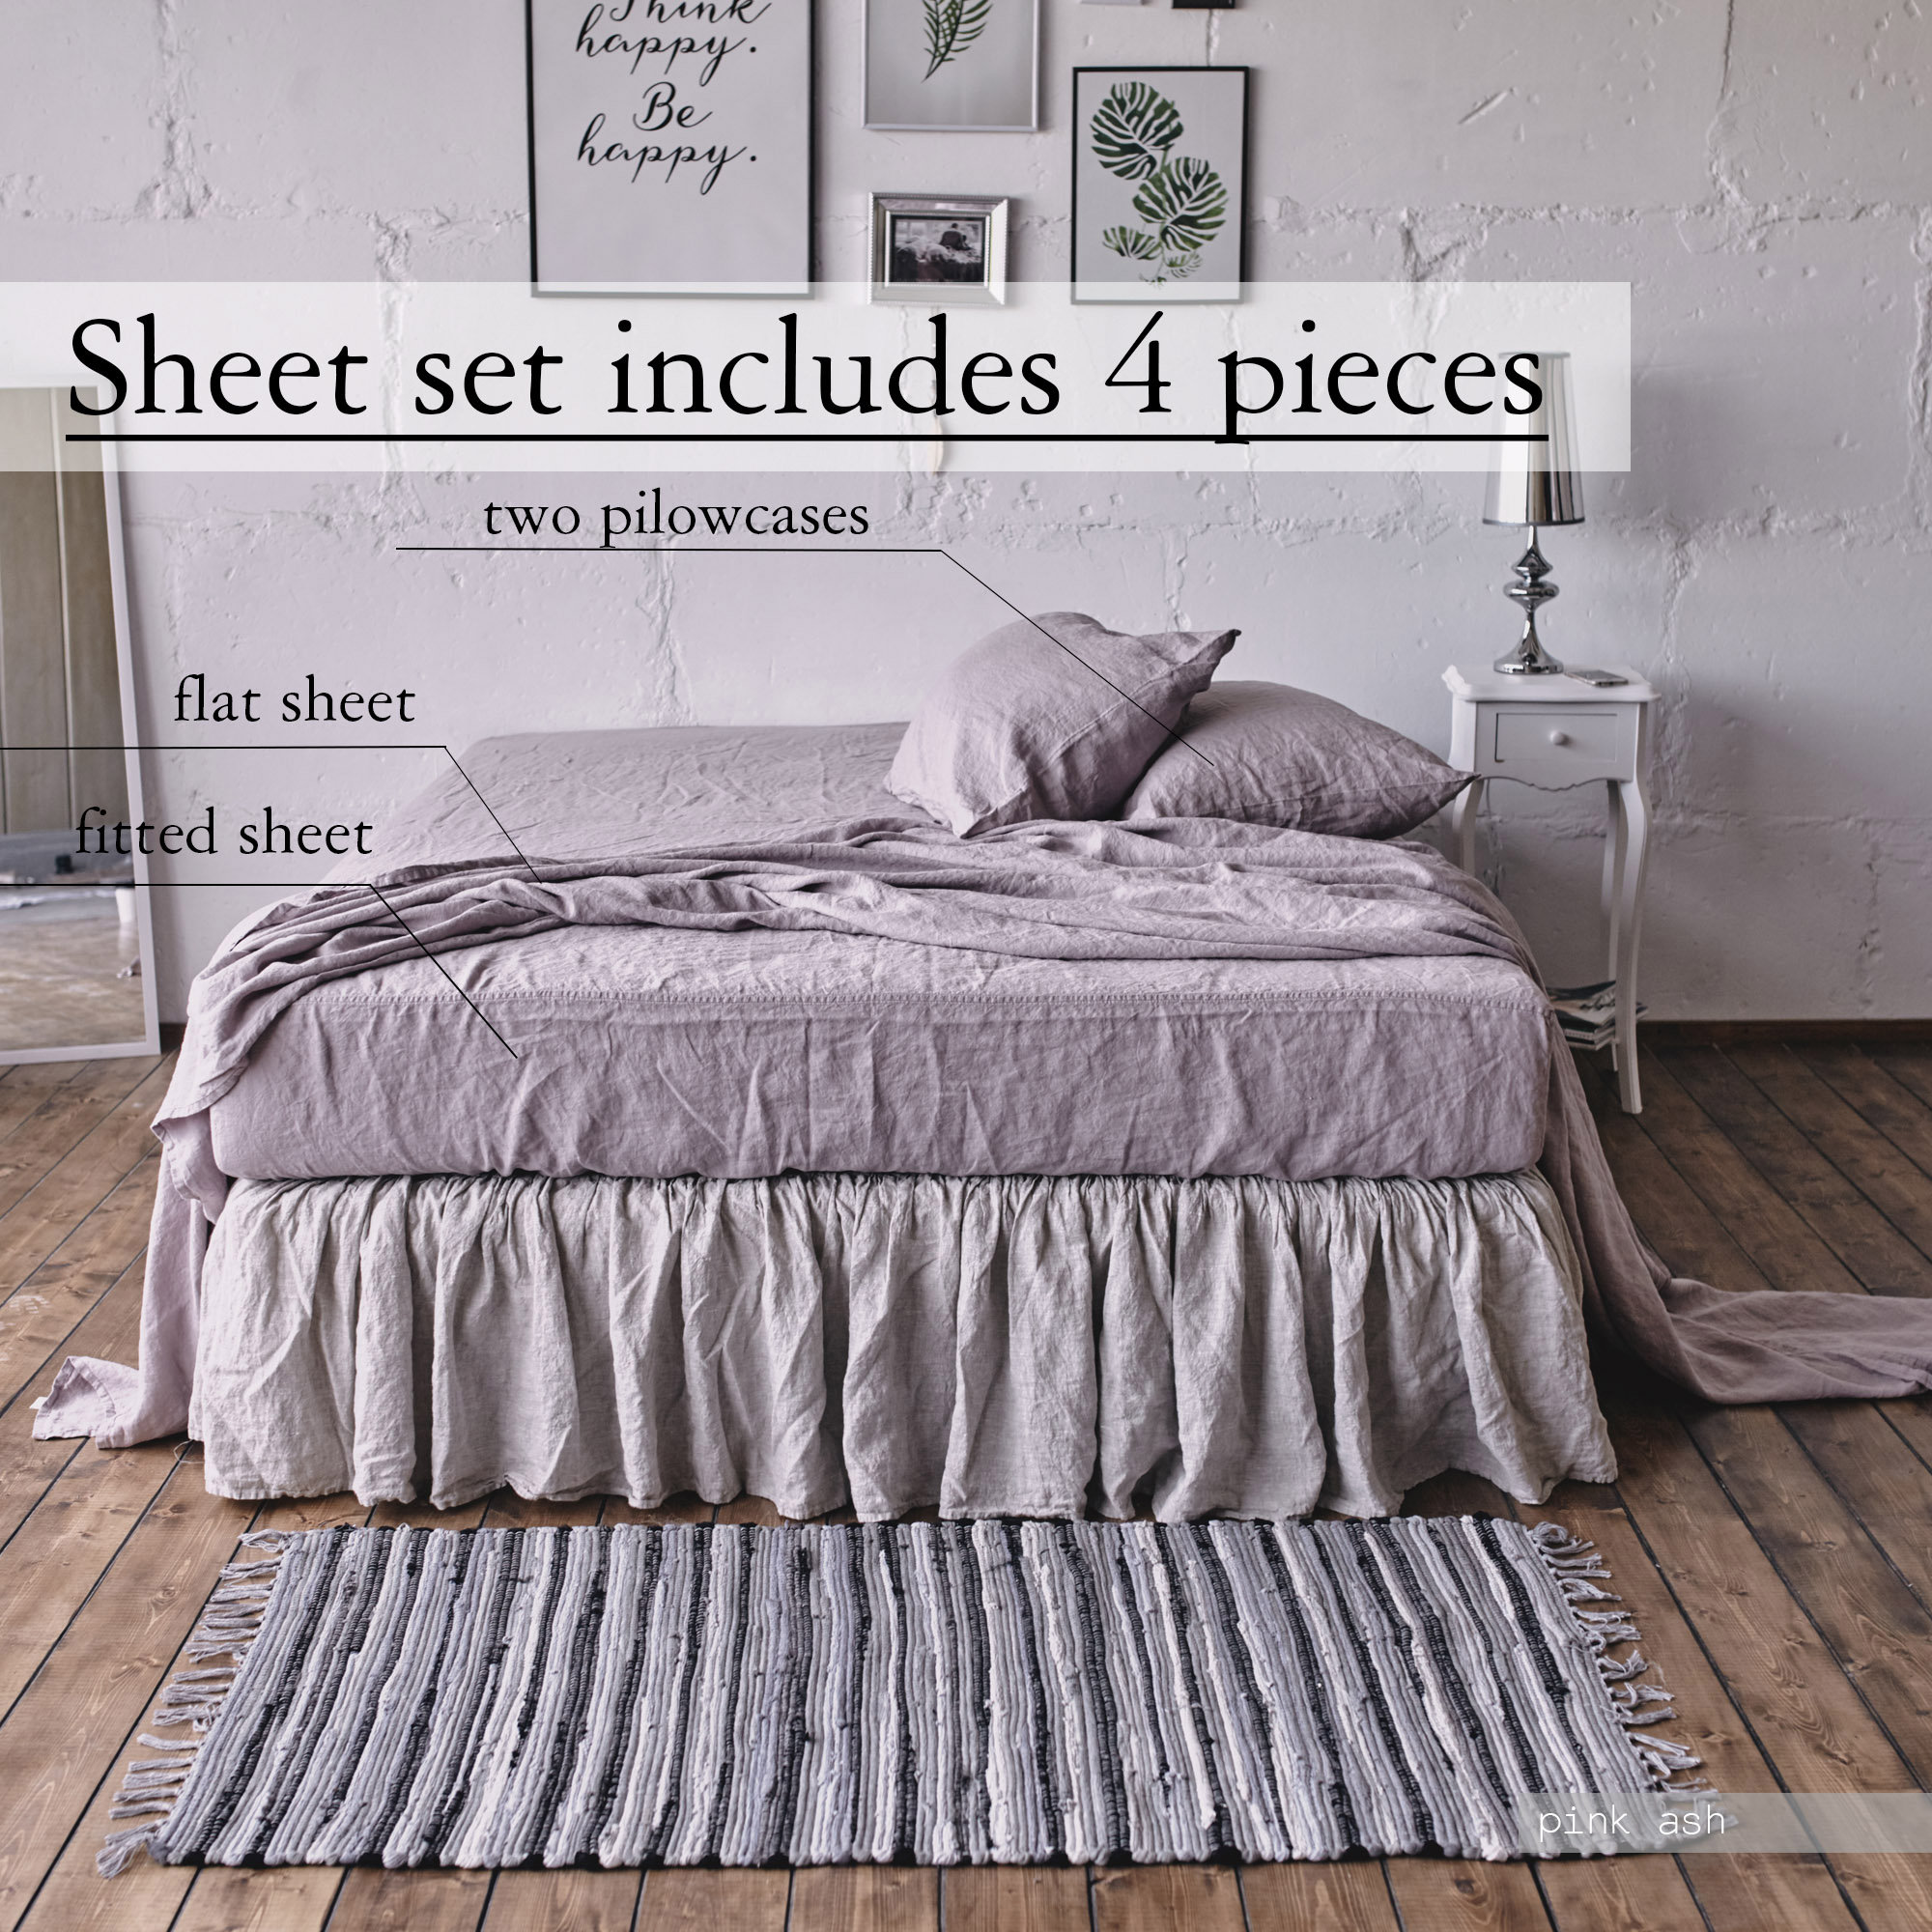 Antique Bed Set 100 Linen Sheet, Antique Twin Bed Set